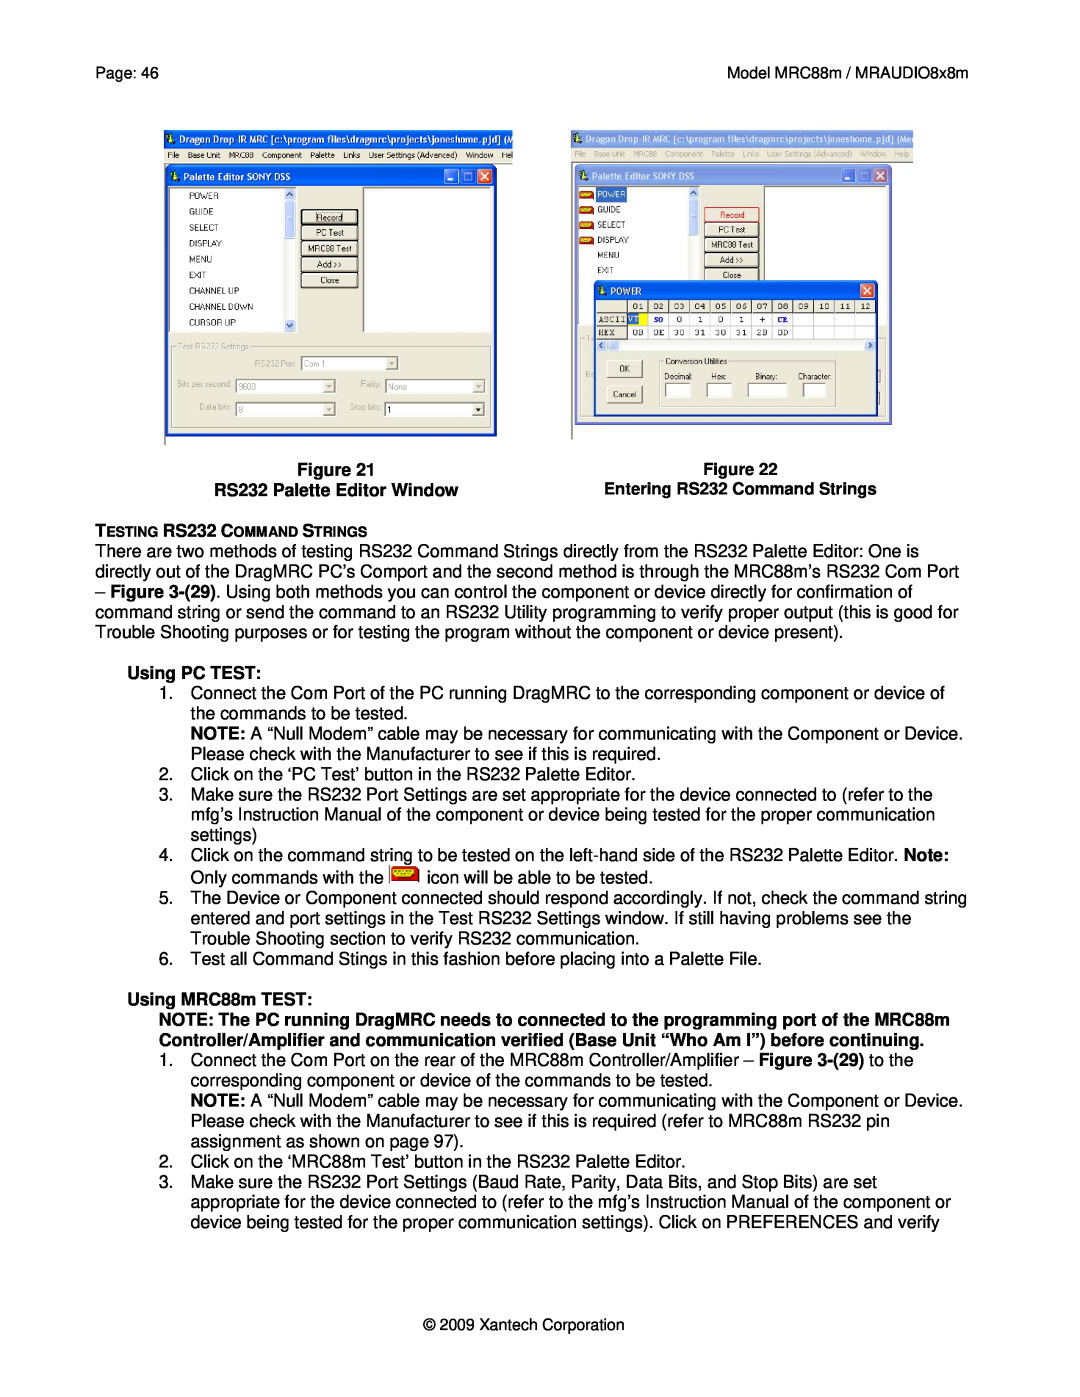 Xantech MRC88M Figure, RS232 Palette Editor Window, Using PC TEST, Using MRC88m TEST, Entering RS232 Command Strings 